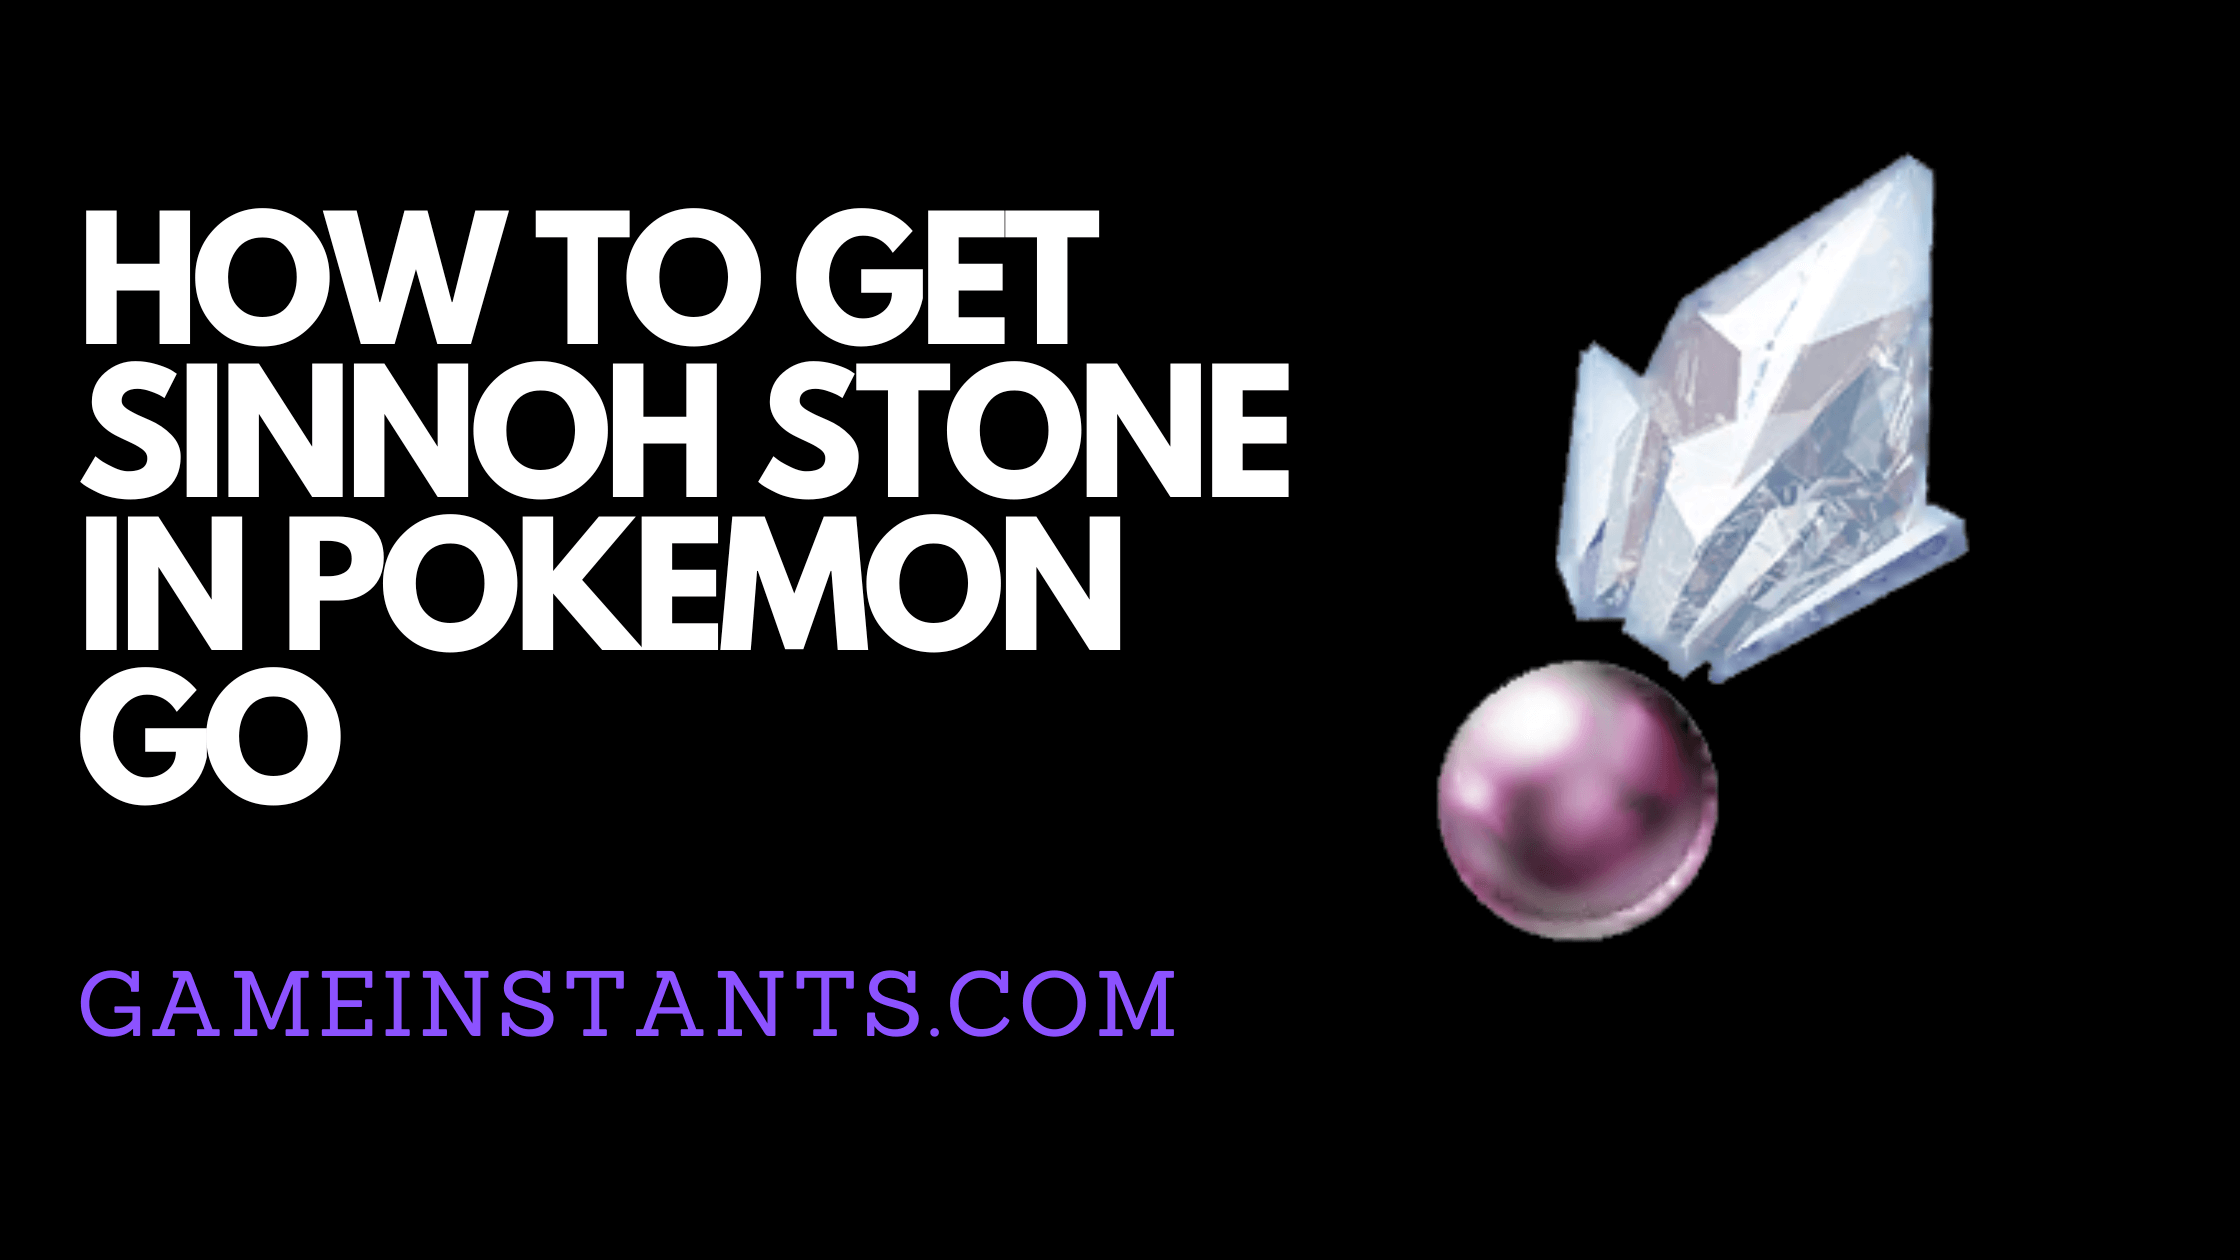 How To Get Sinnoh Stone in Pokemon GO